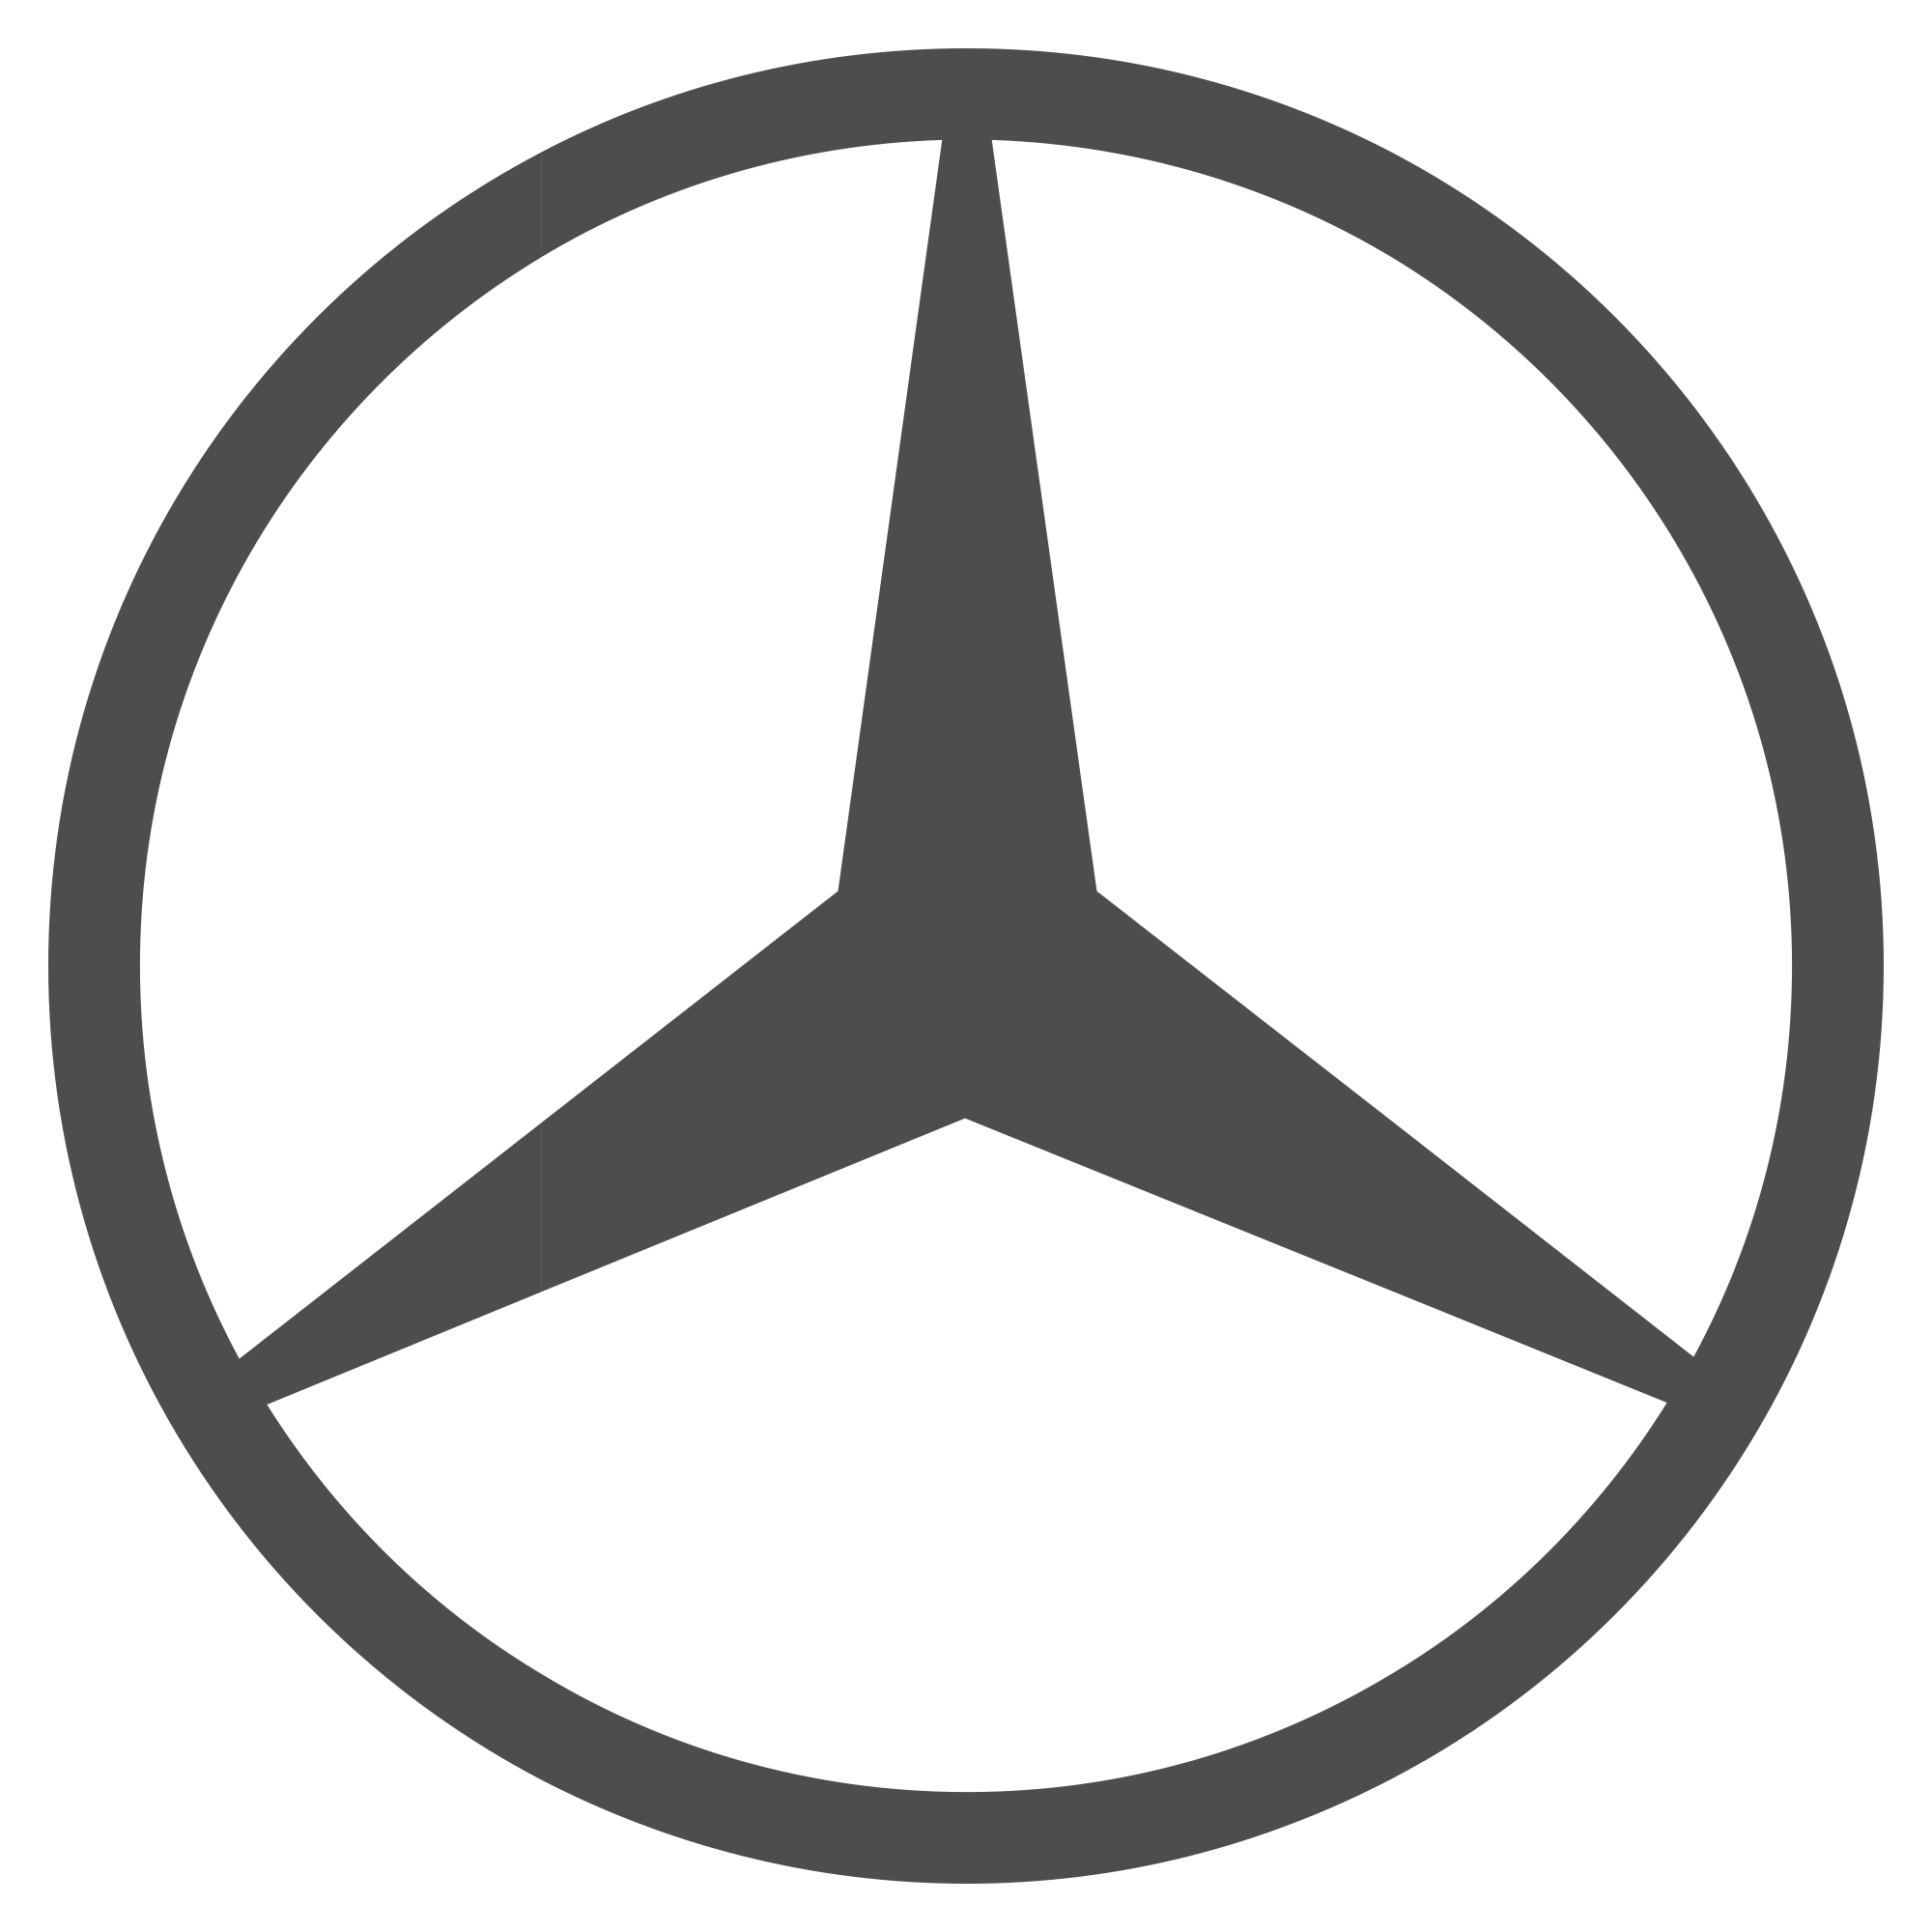 2 C Logo - Mercedes Benz Free Logo.svg